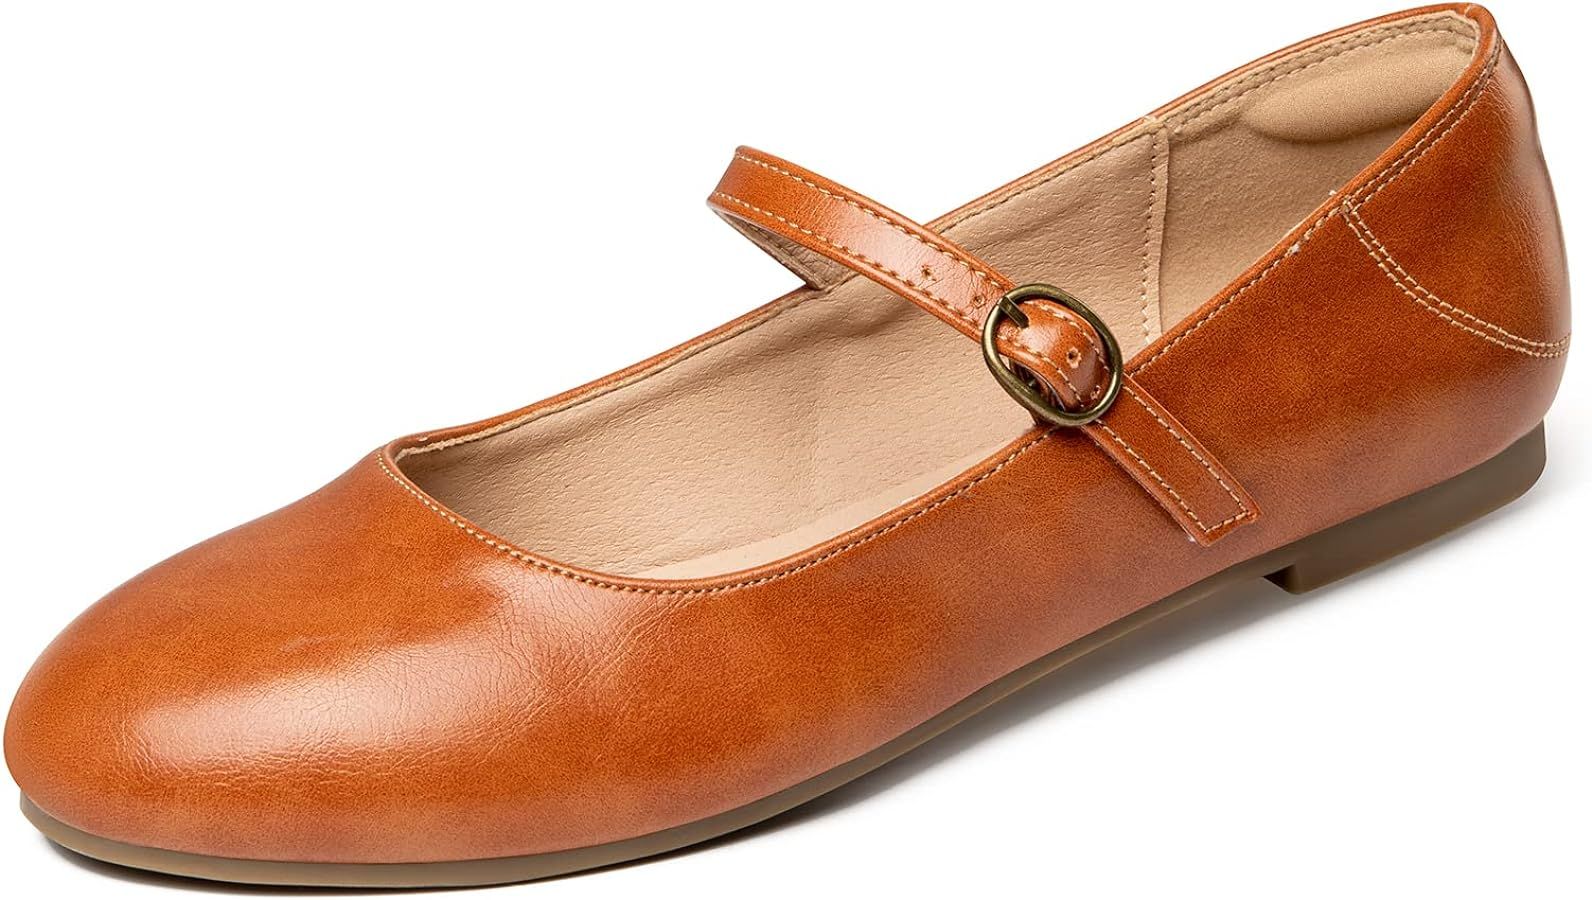 Rekayla Mary Jane Flats Shoes Women Dressy Comfortable Round Toe Slip on Ballet Flat | Amazon (US)